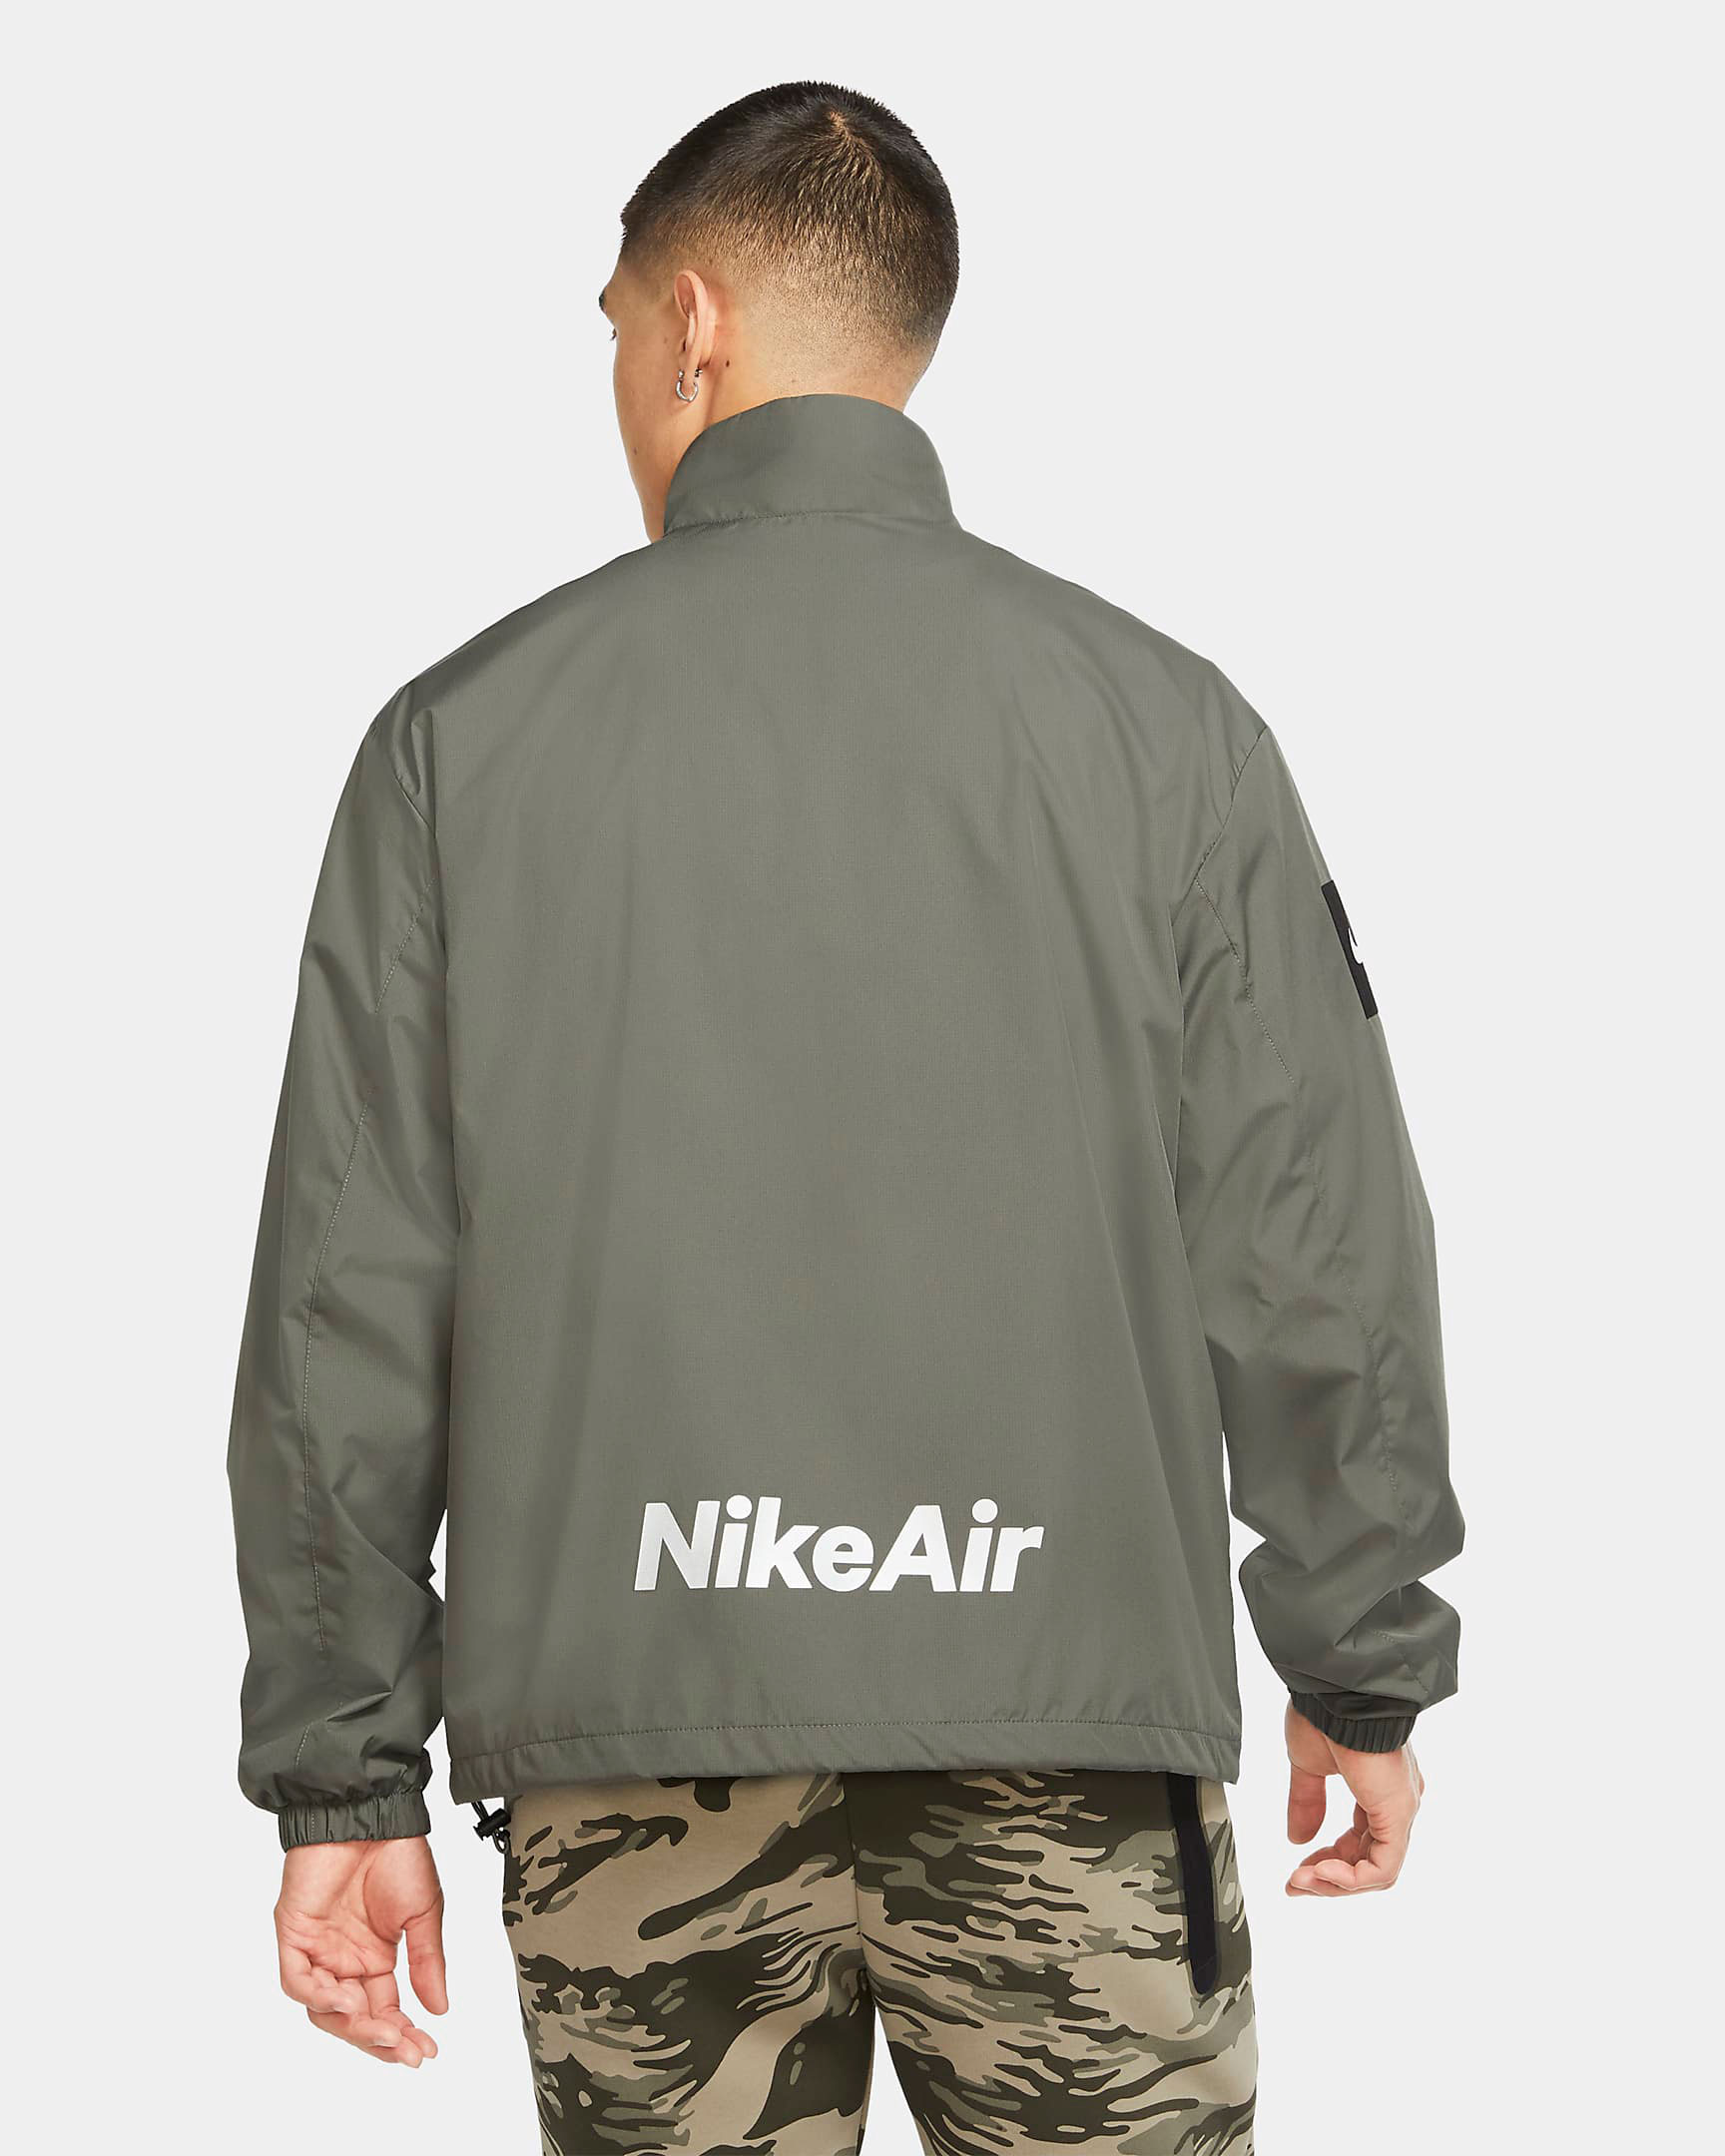 nike-air-reflective-jacket-twilight-marsh-2